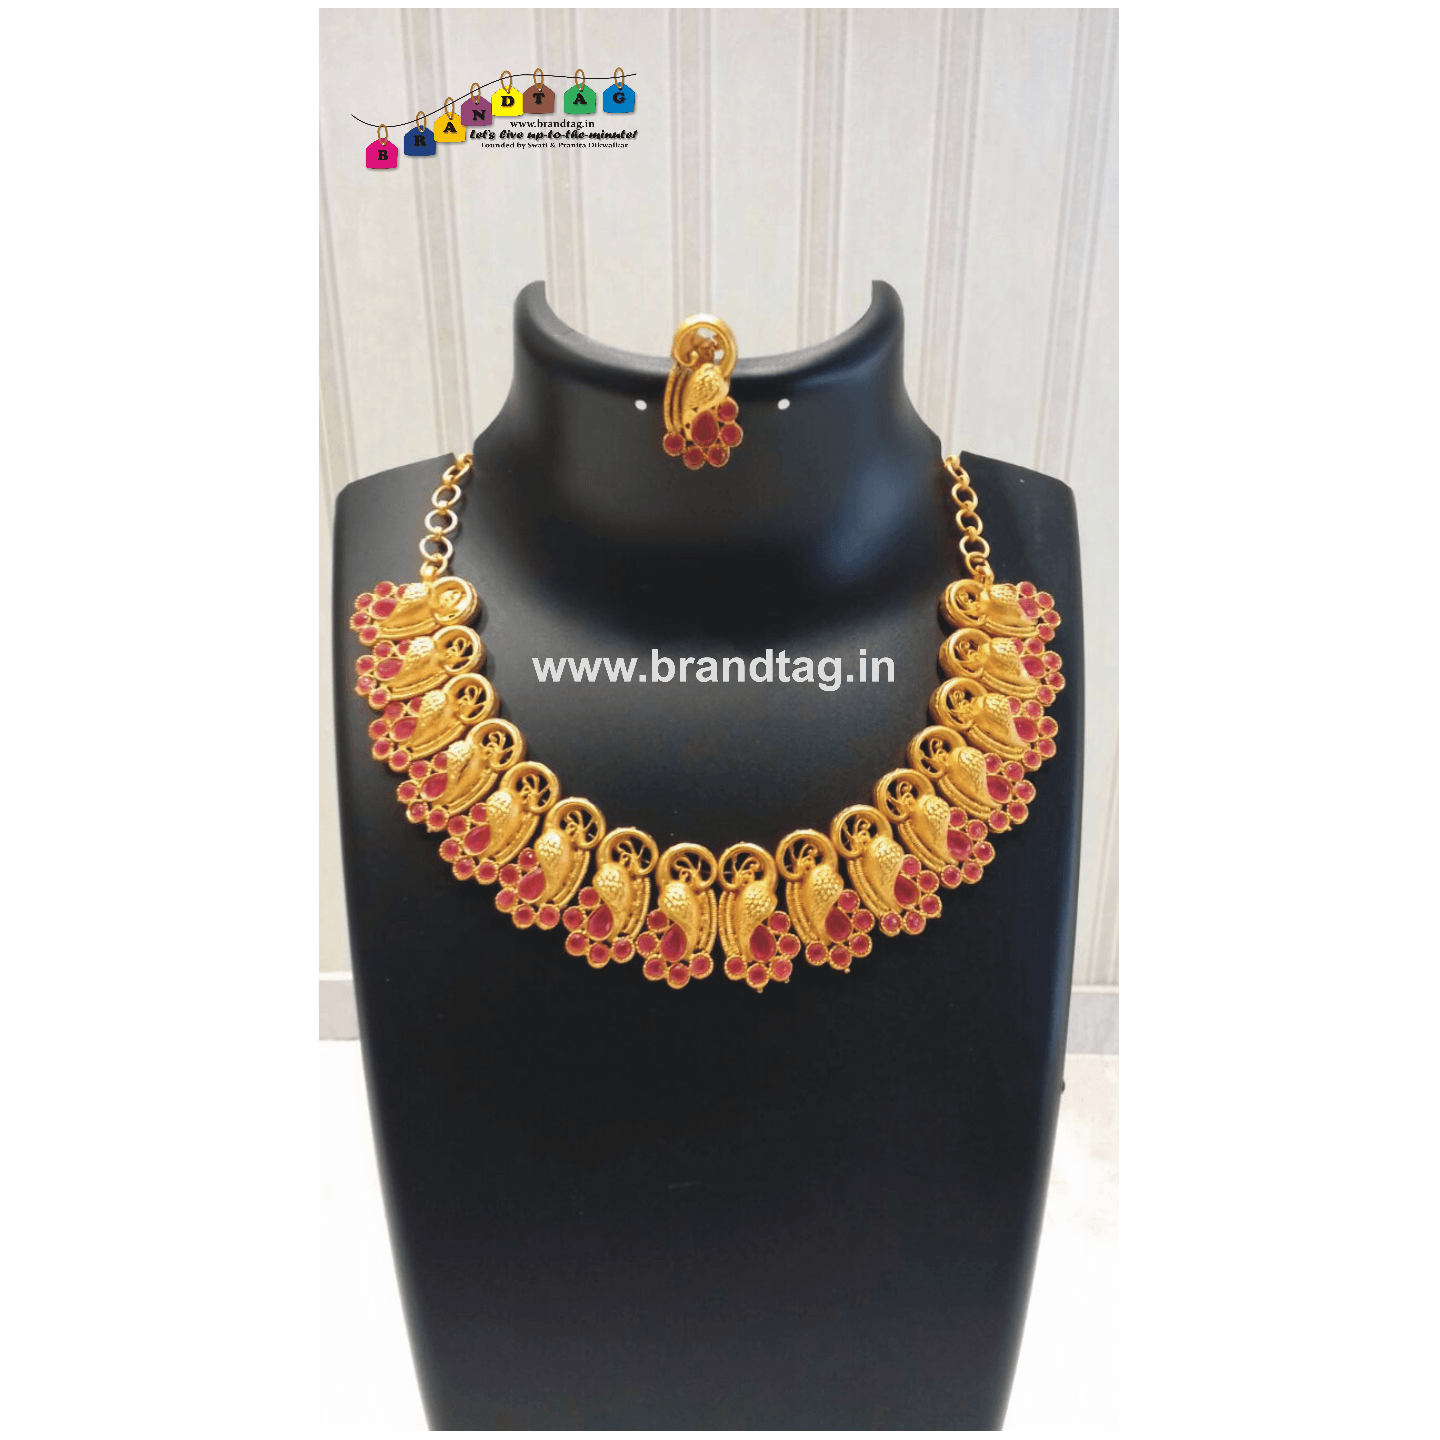 Diwali Collection - Striking Golden Necklace!